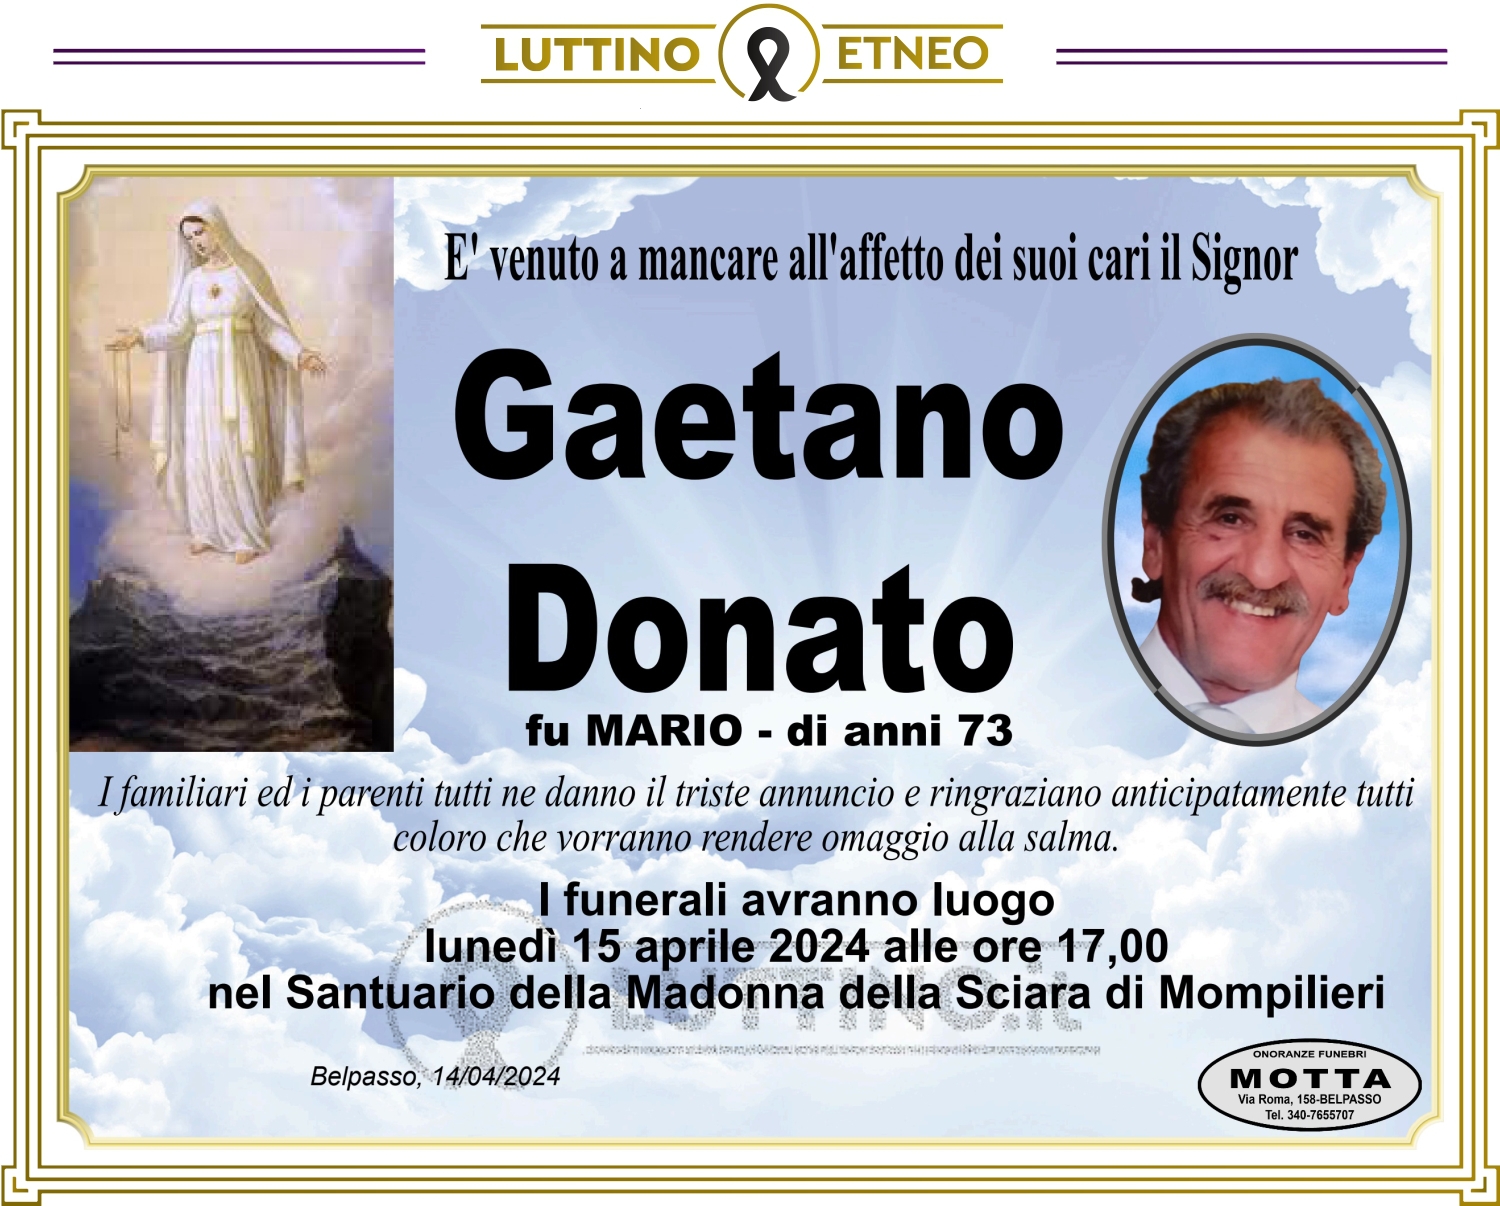 Gaetano Donato